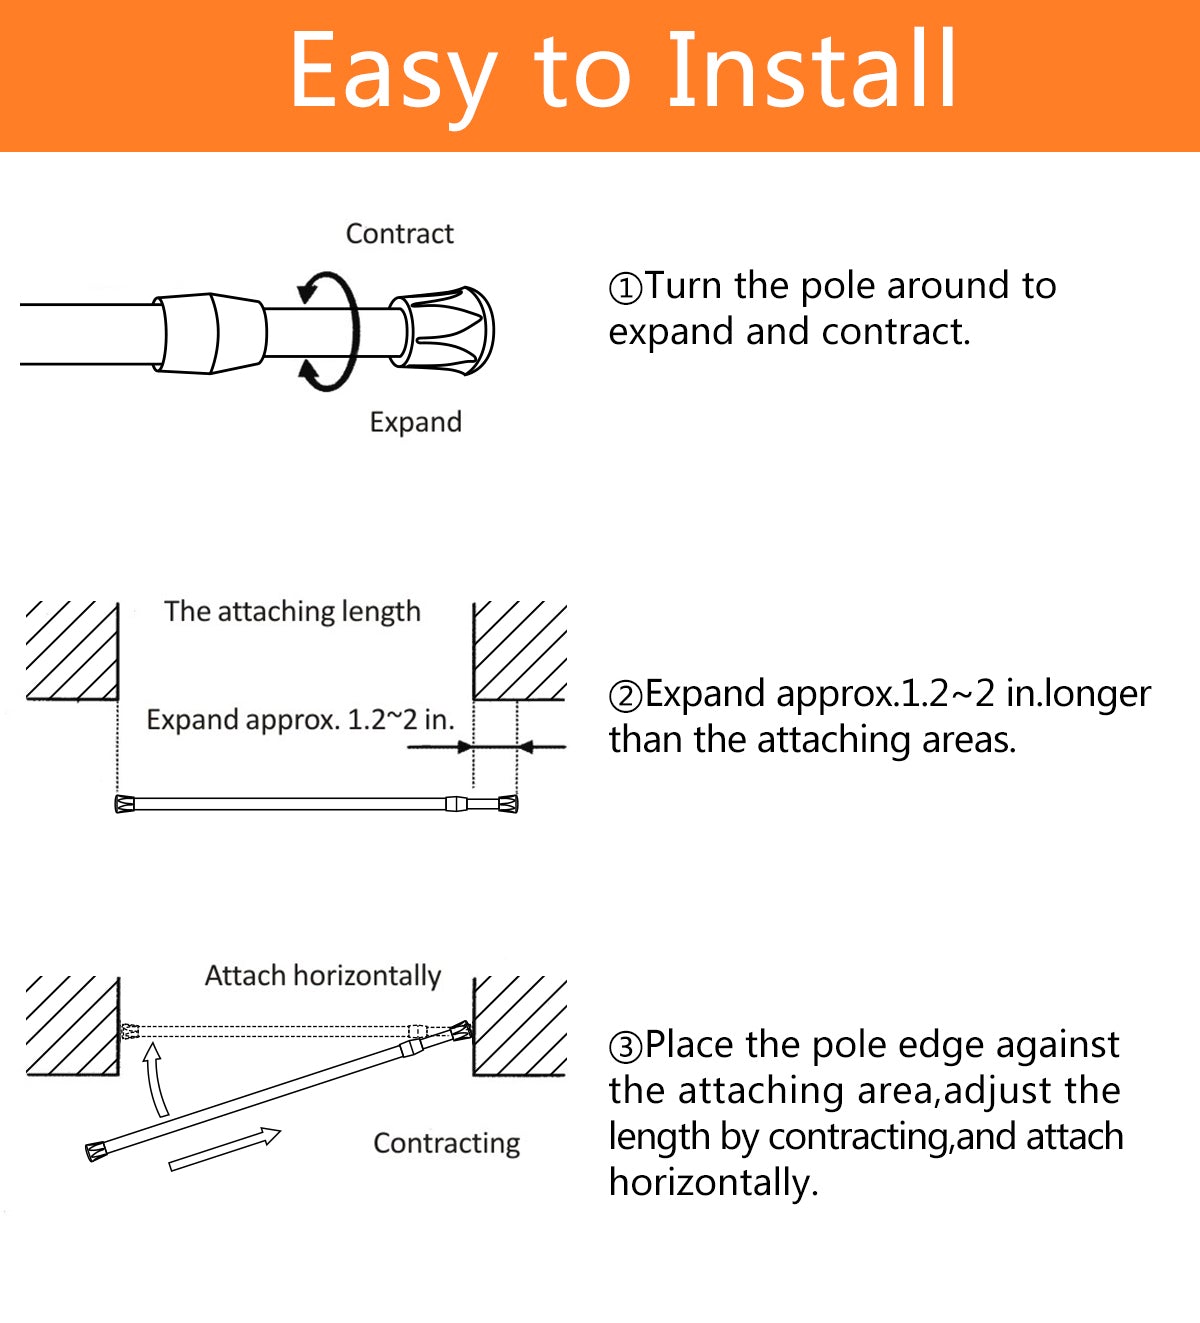 6 Pack Adjustable Tension rod 16-28 Inch